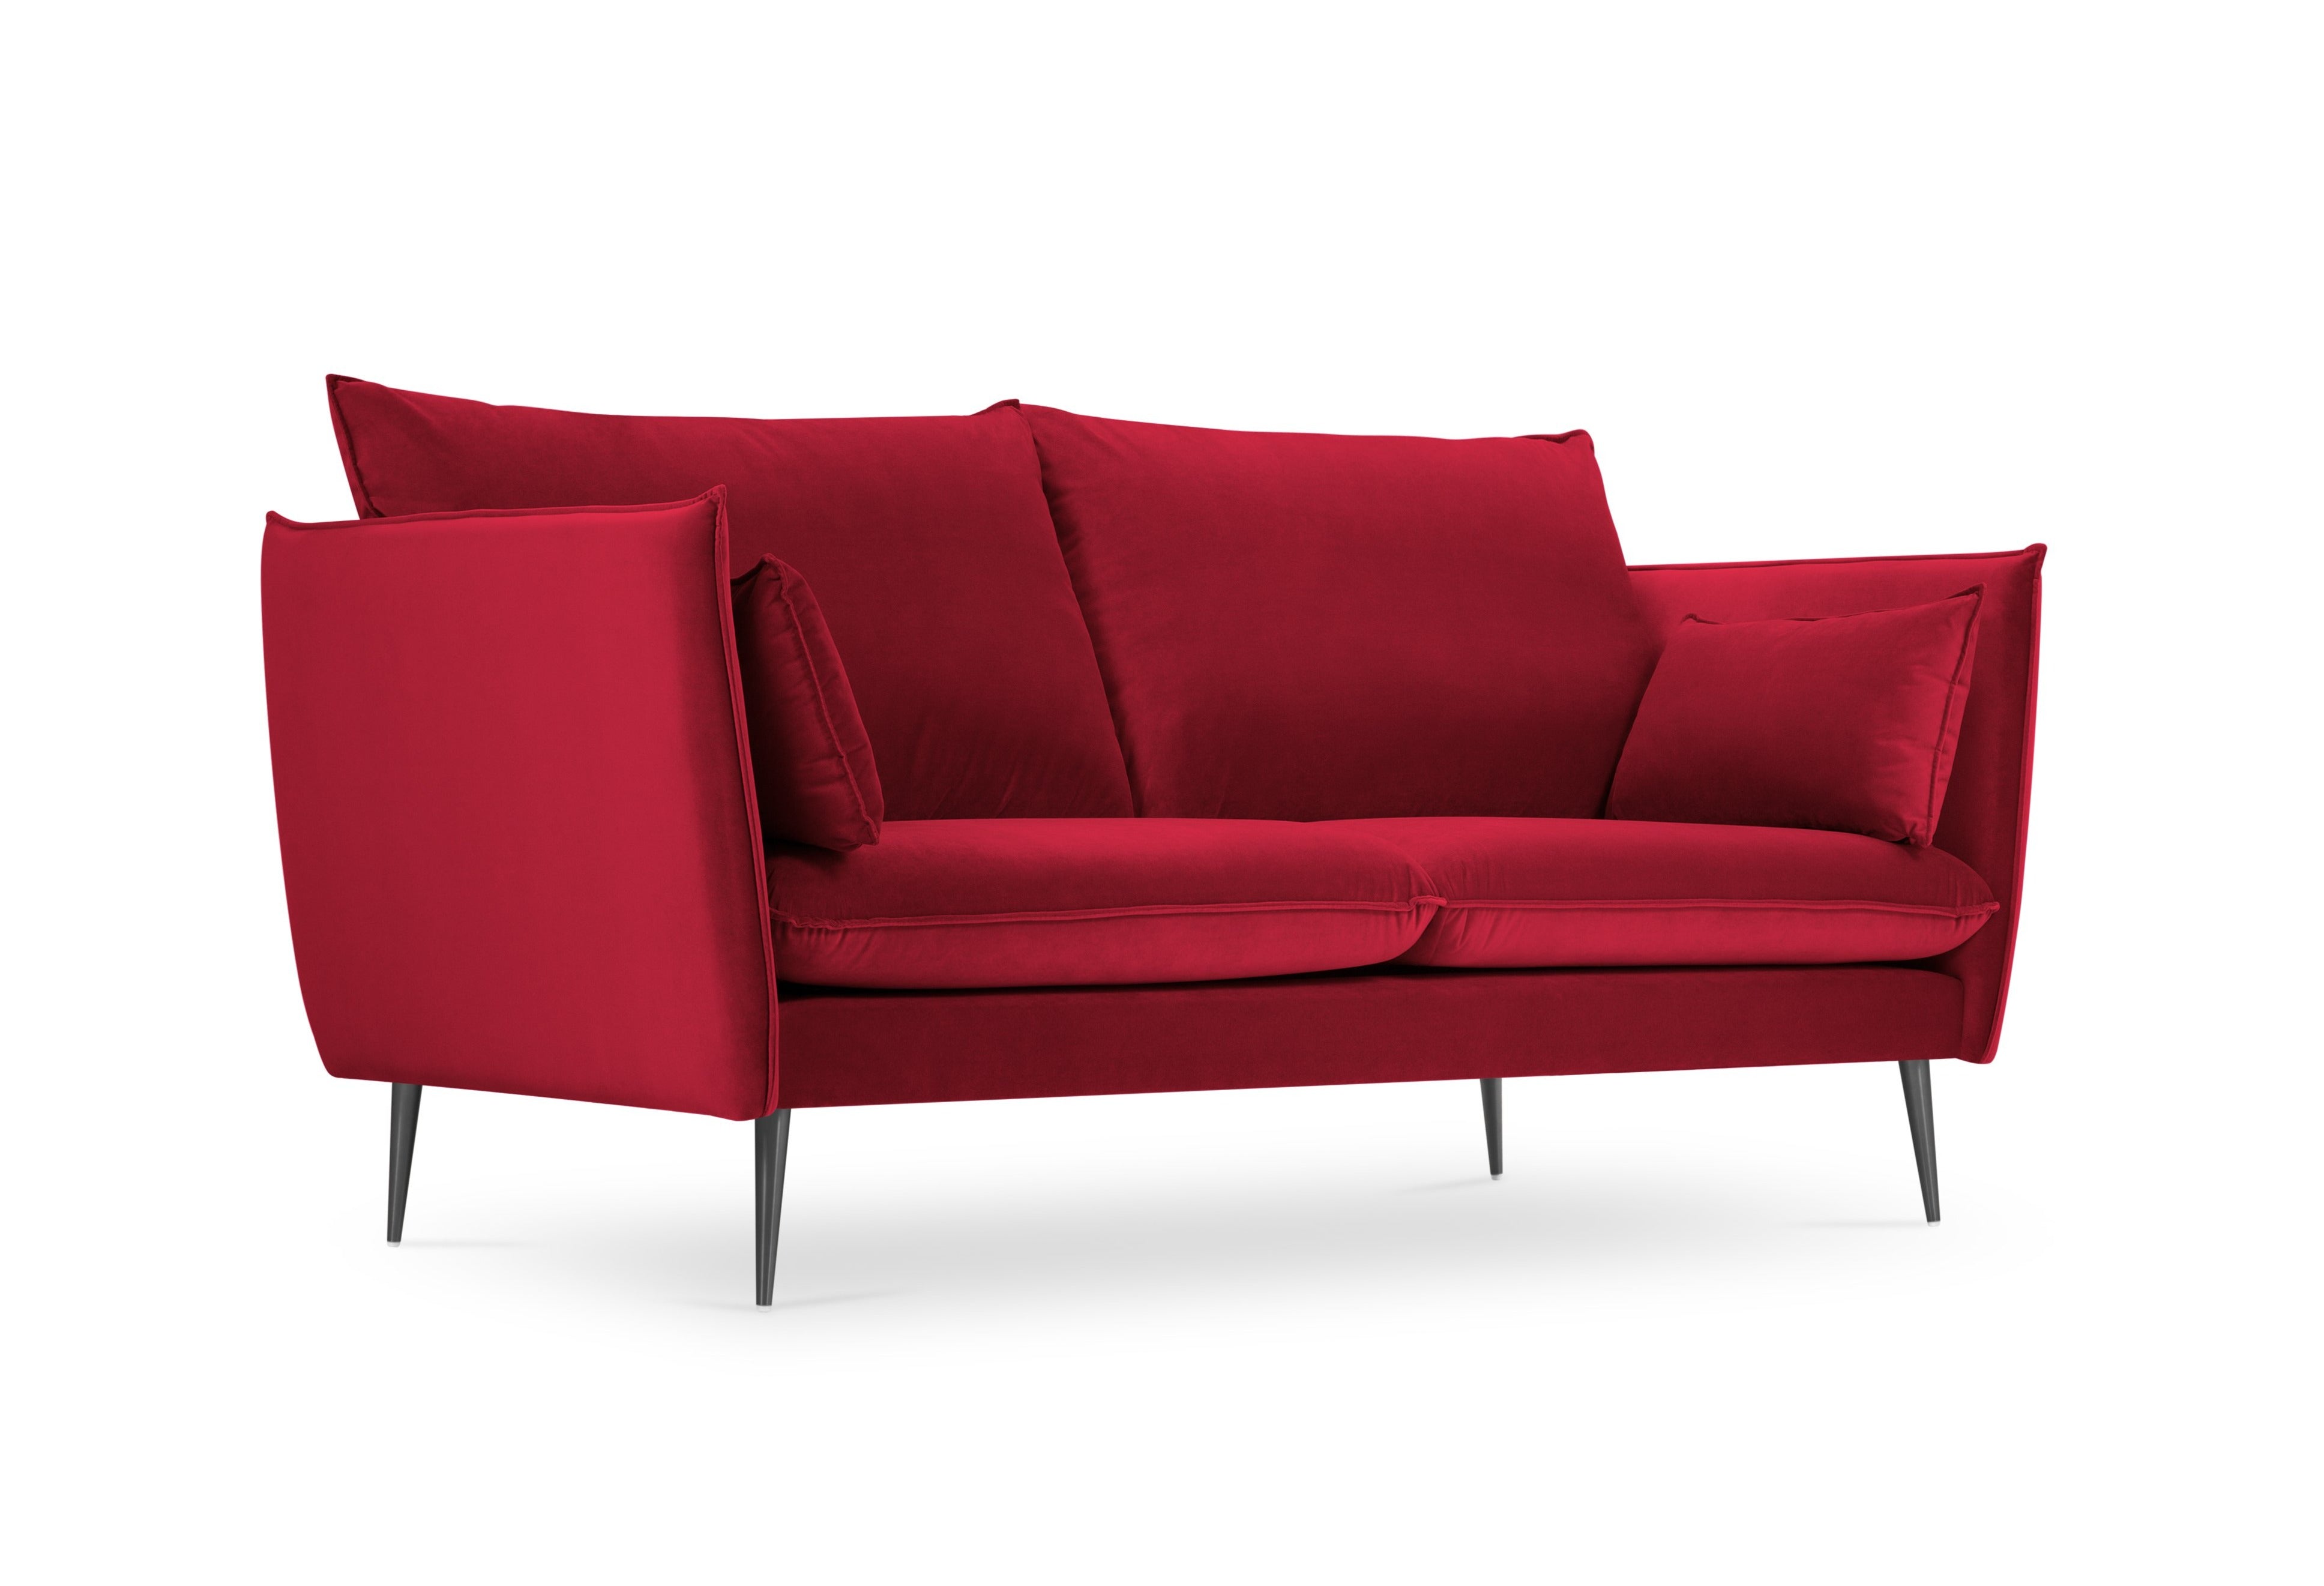 2-person red sofa